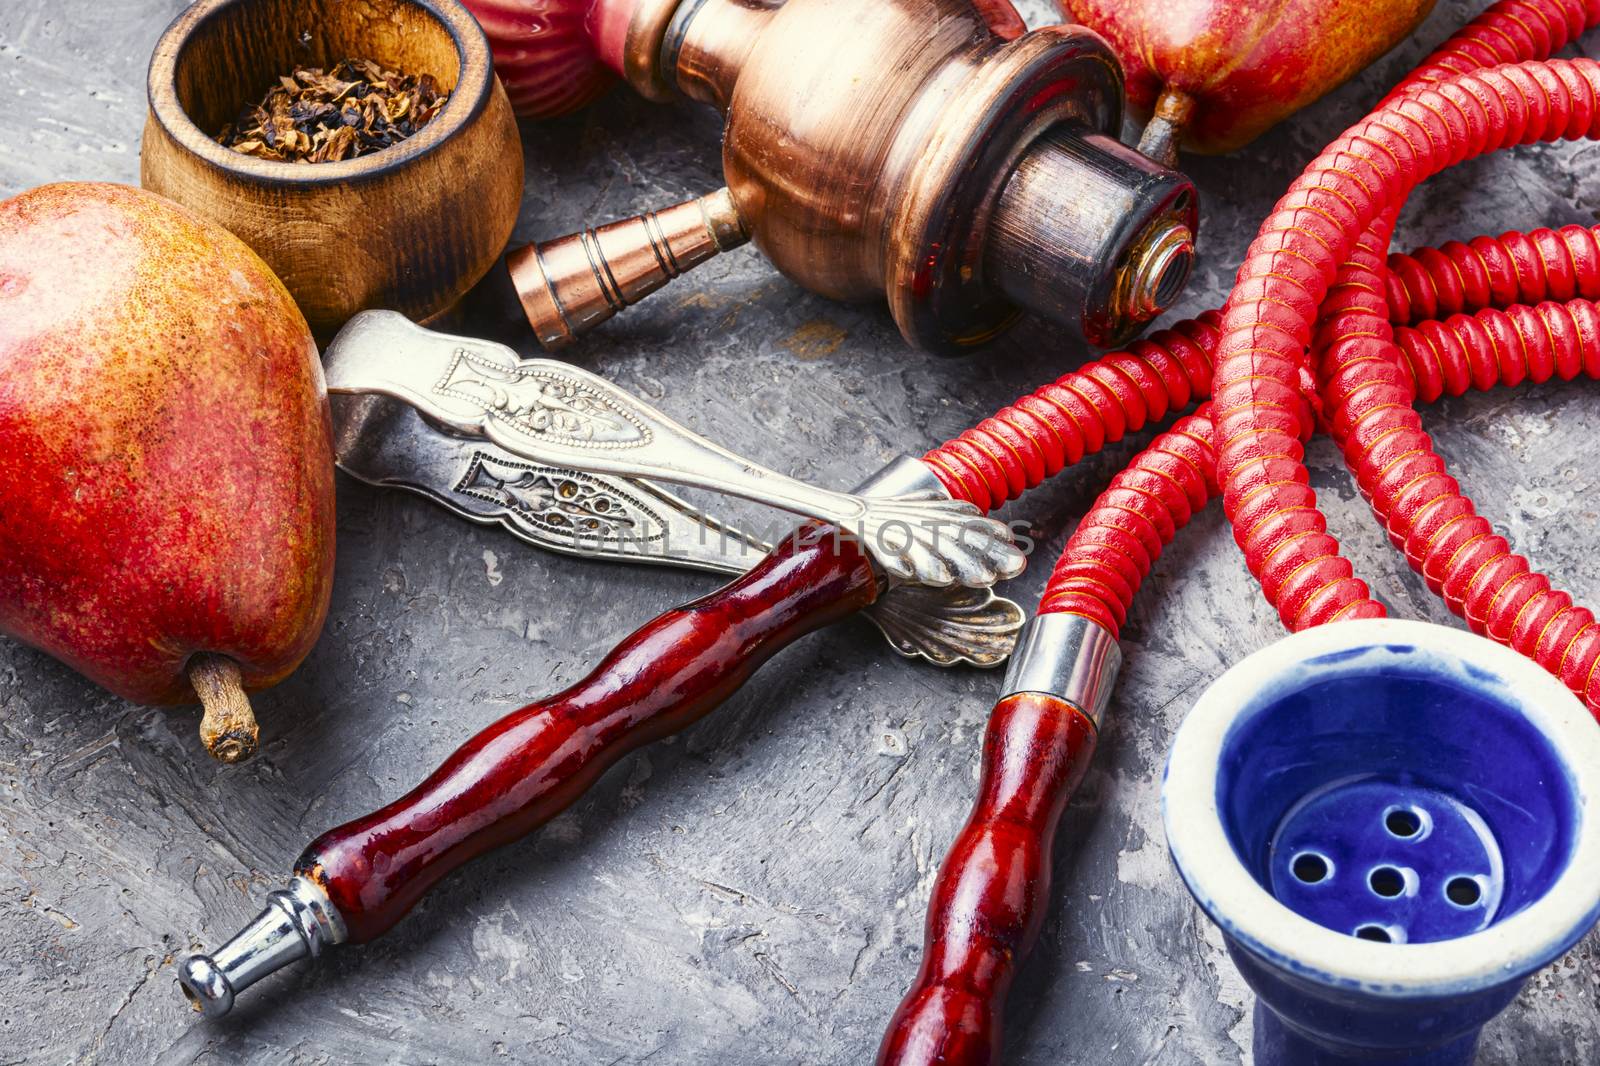 Smoking hookah.Details of Turkish kalian.Shisha with a fruity aroma of tobacco.